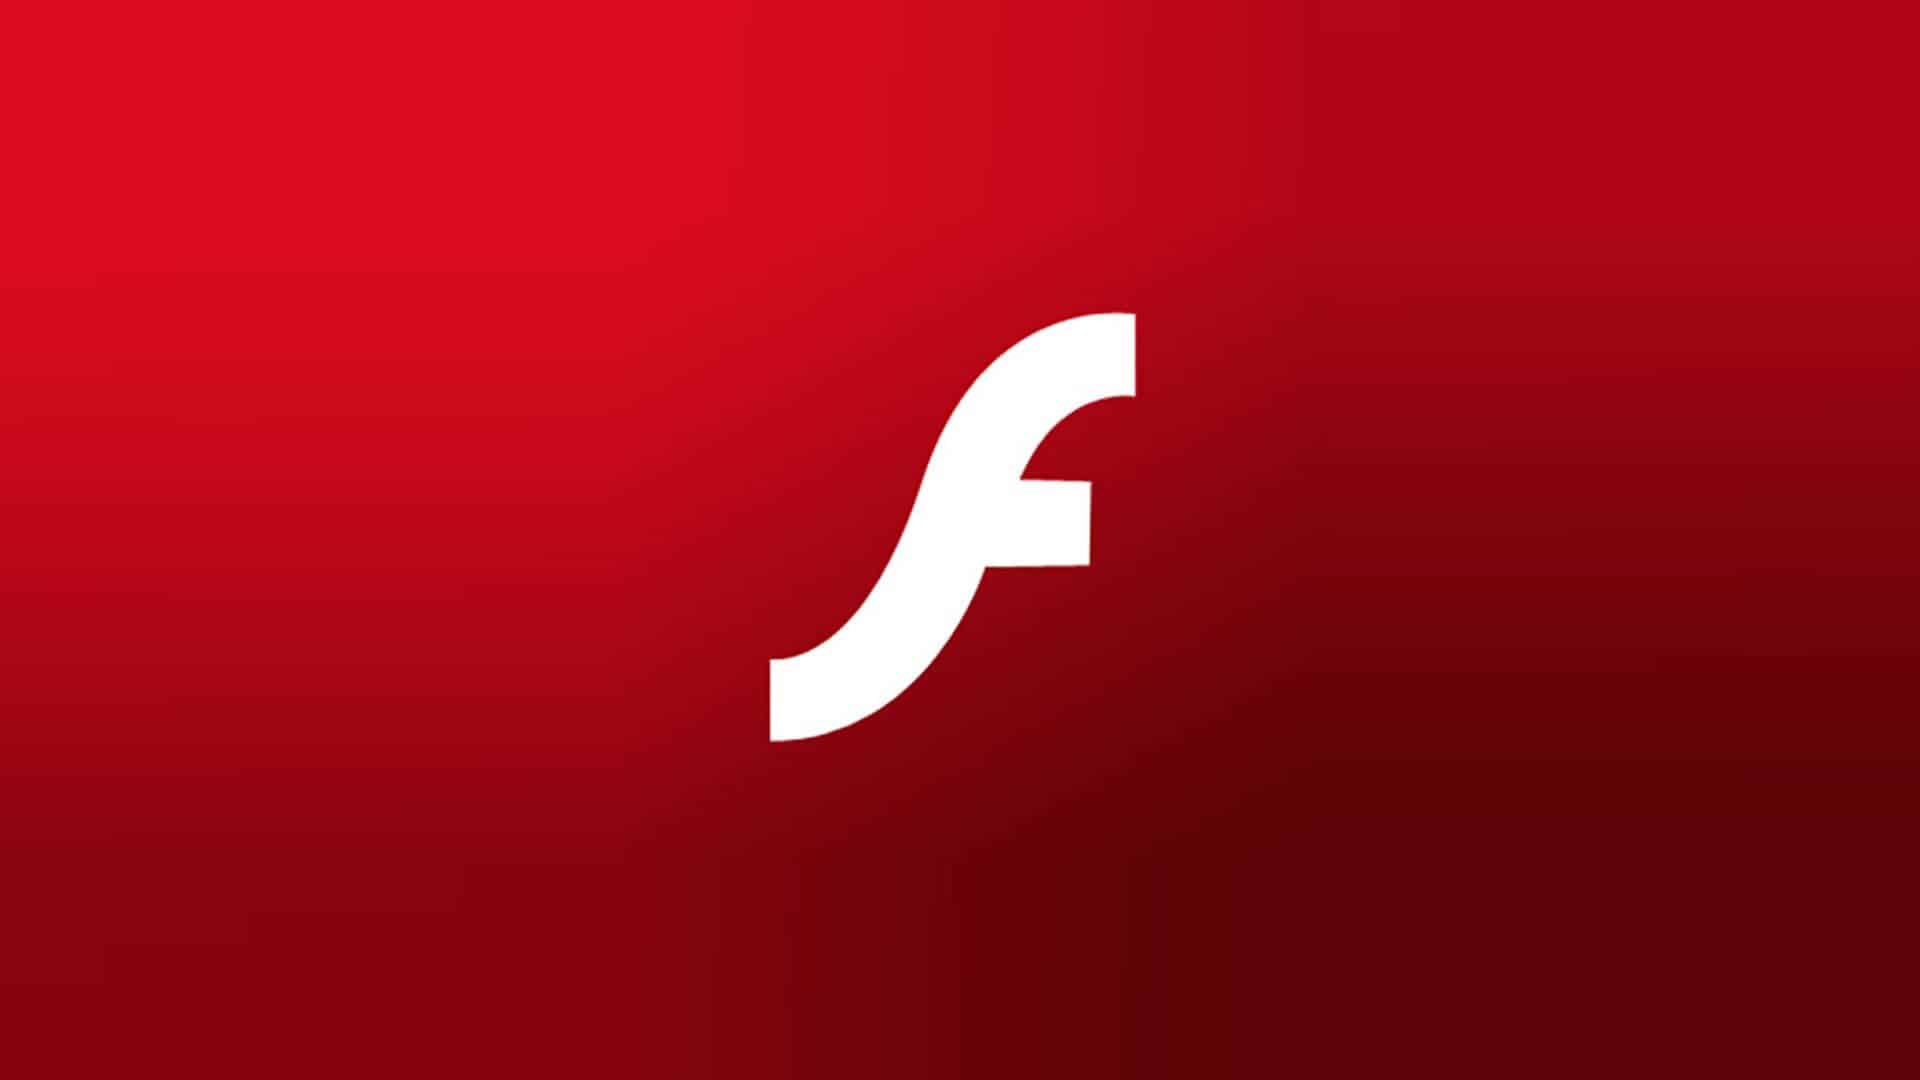 Windows 10: التحديث الجديد يقتل برنامج Adobe Flash Player للأبد!